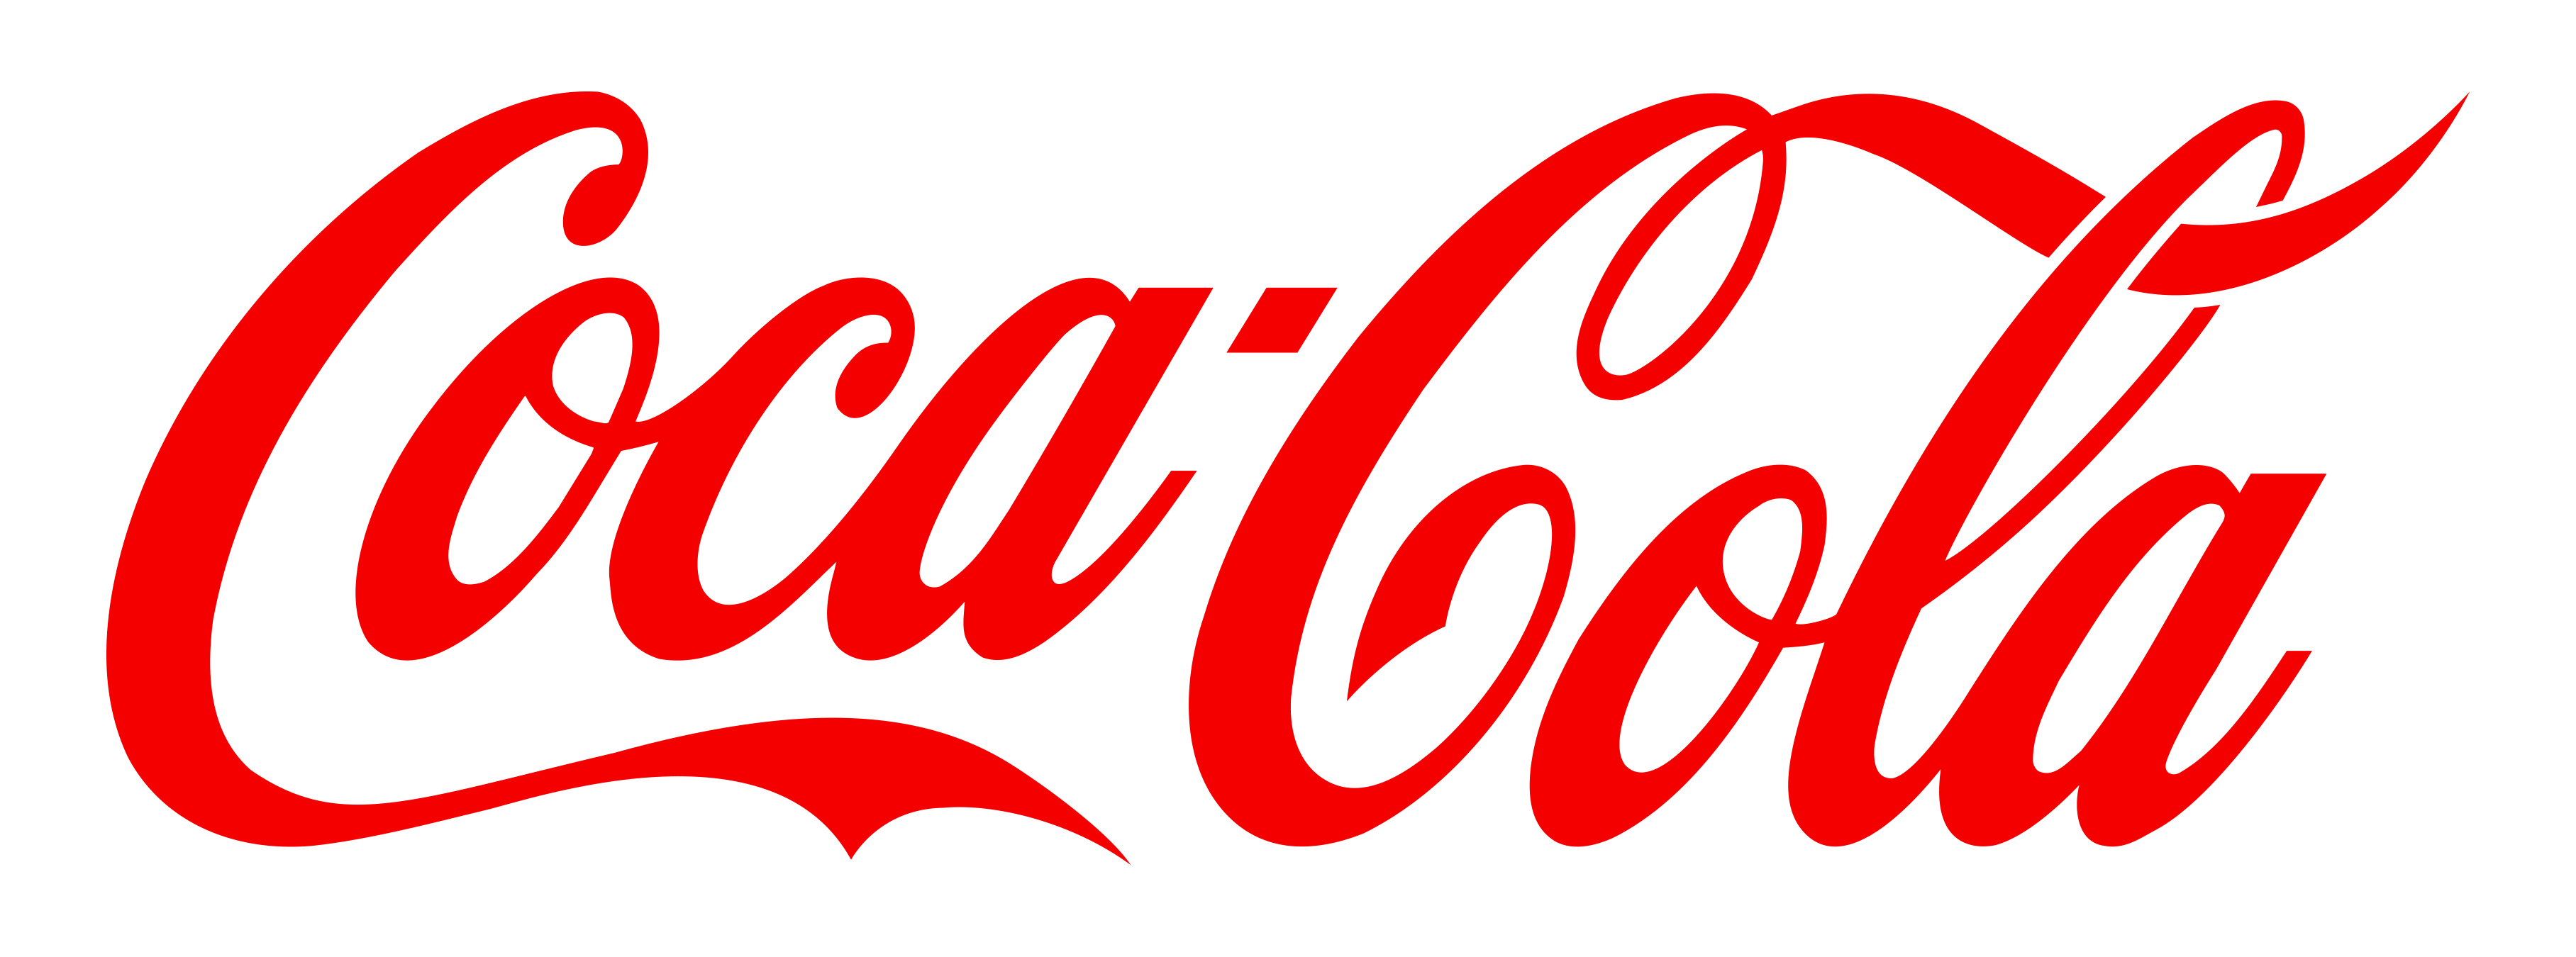 Coca Cola Coke Logo Png Transparent And Svg Vector Freebie Supply ...